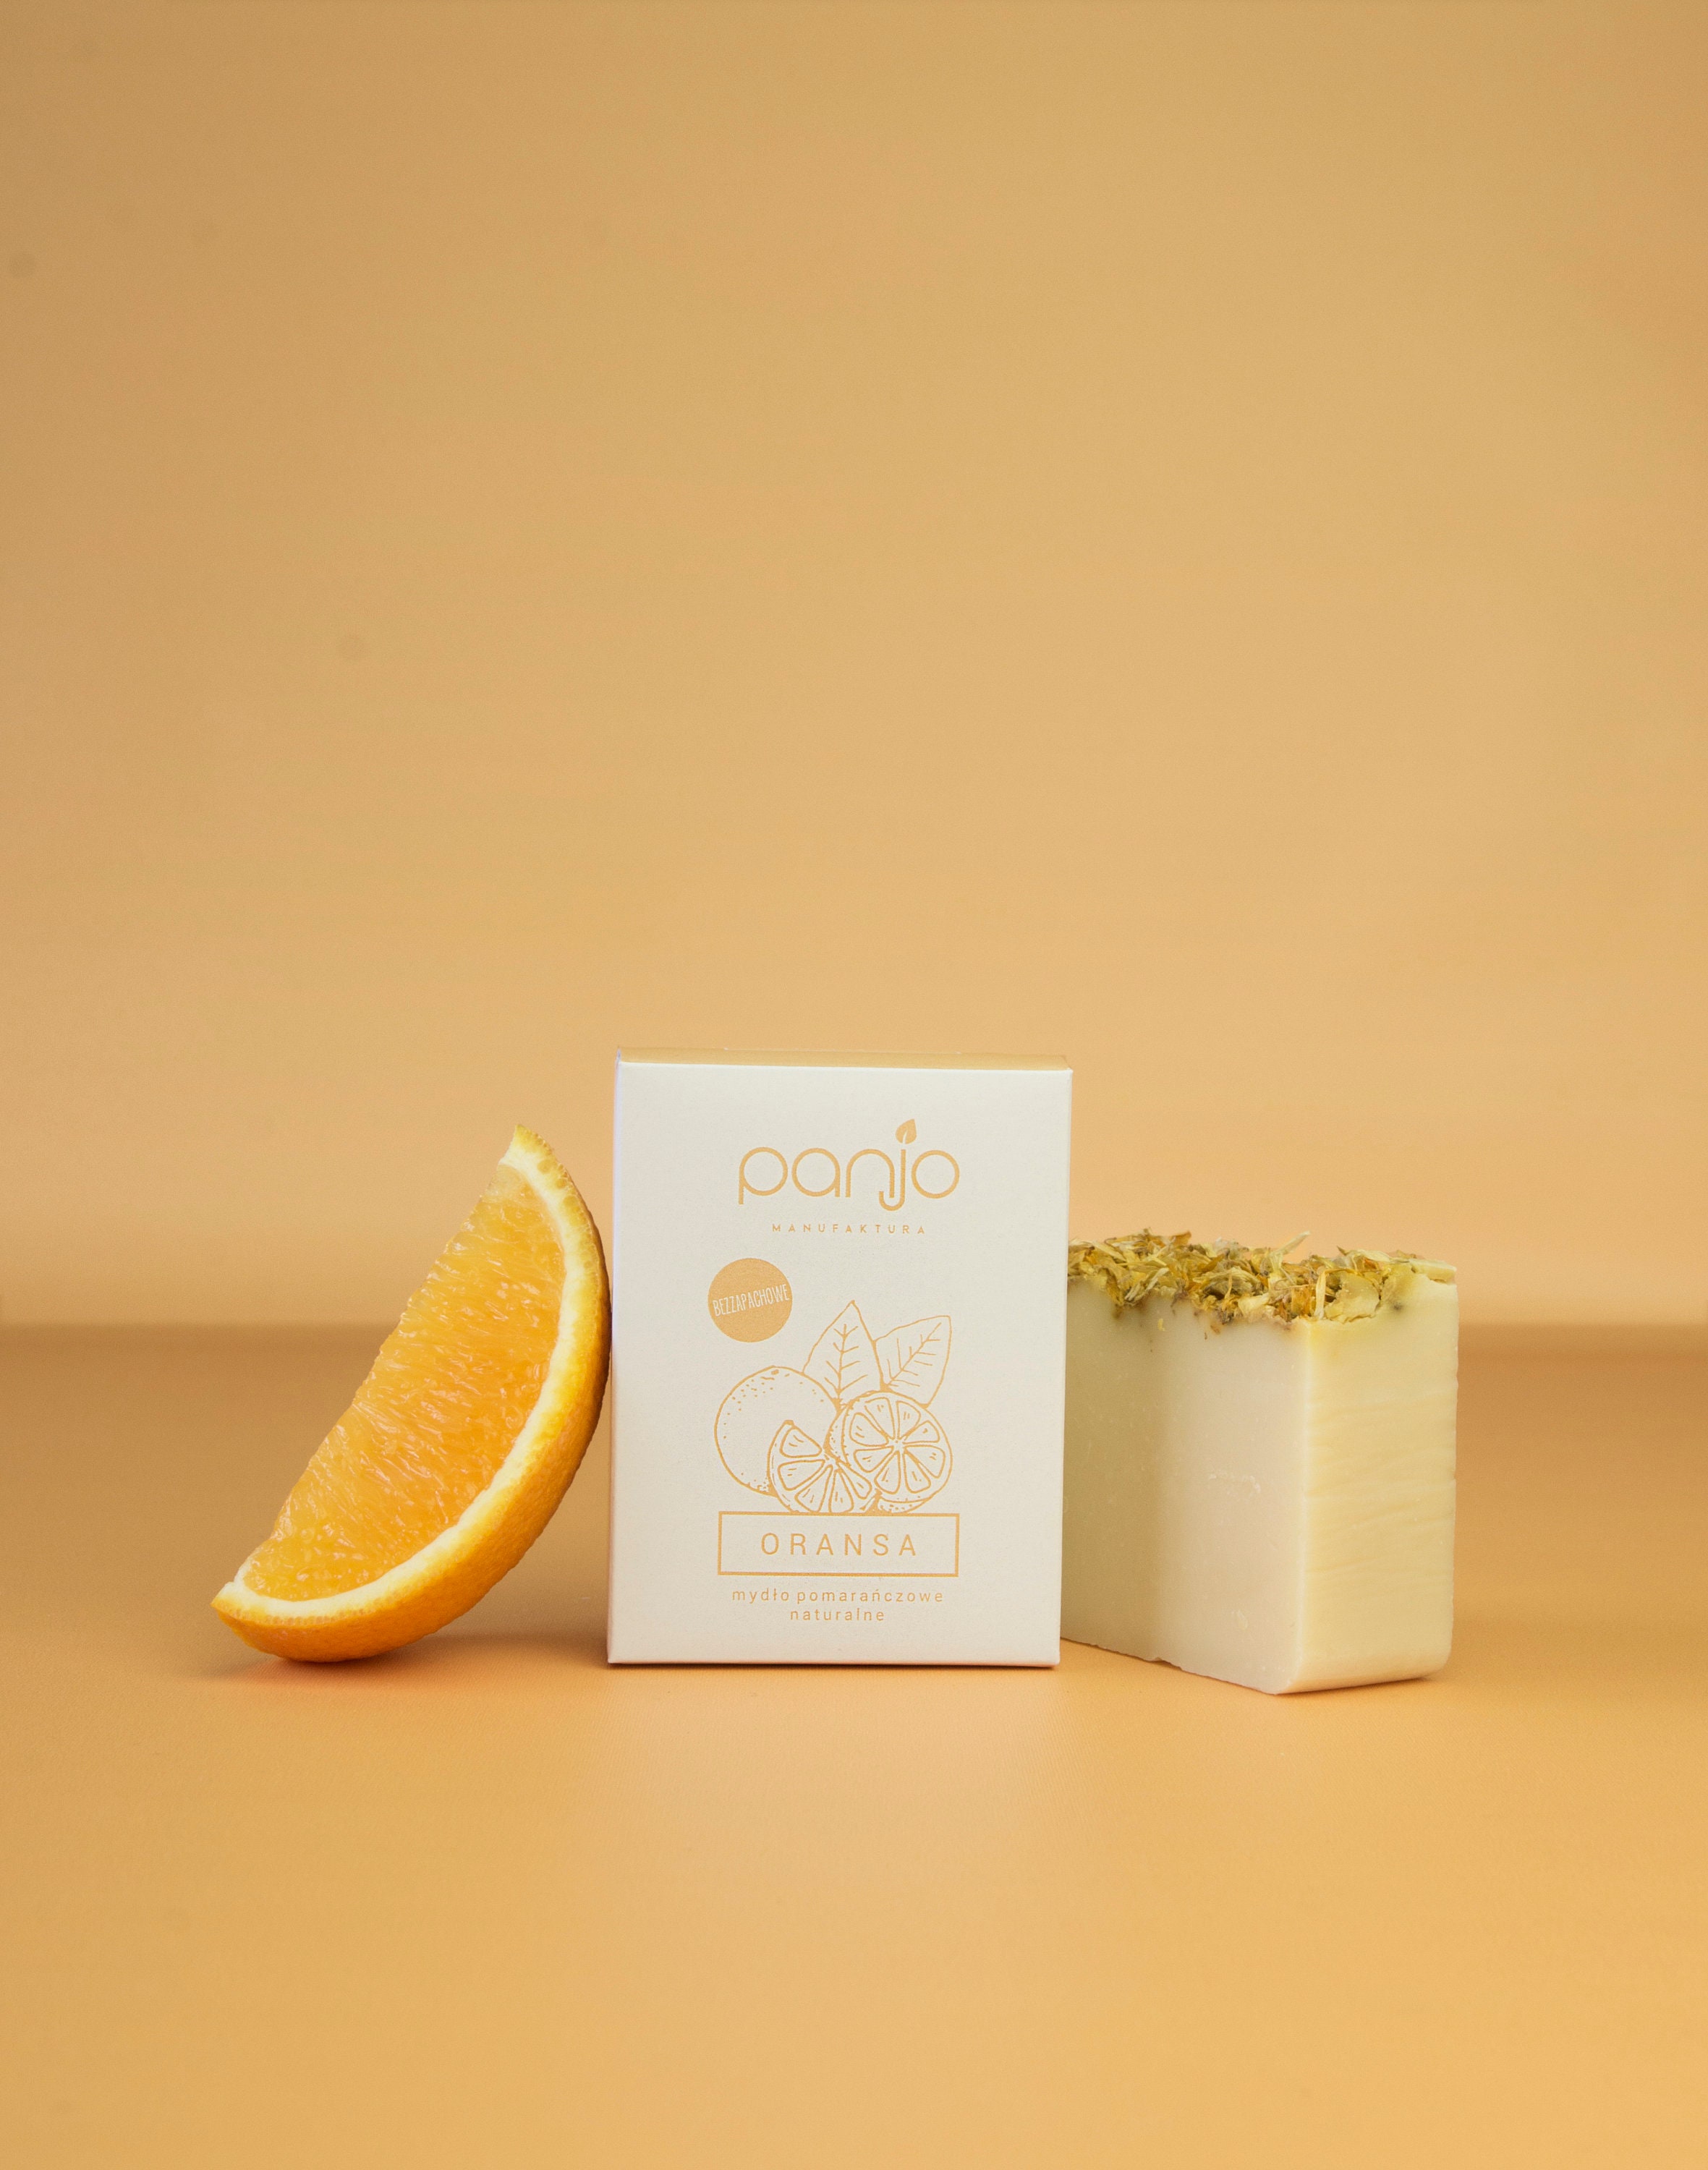 Soapbox Refreshing Moisturizing Liquid Hand Soap, Sweet Orange Citrus, 8 fl. oz.